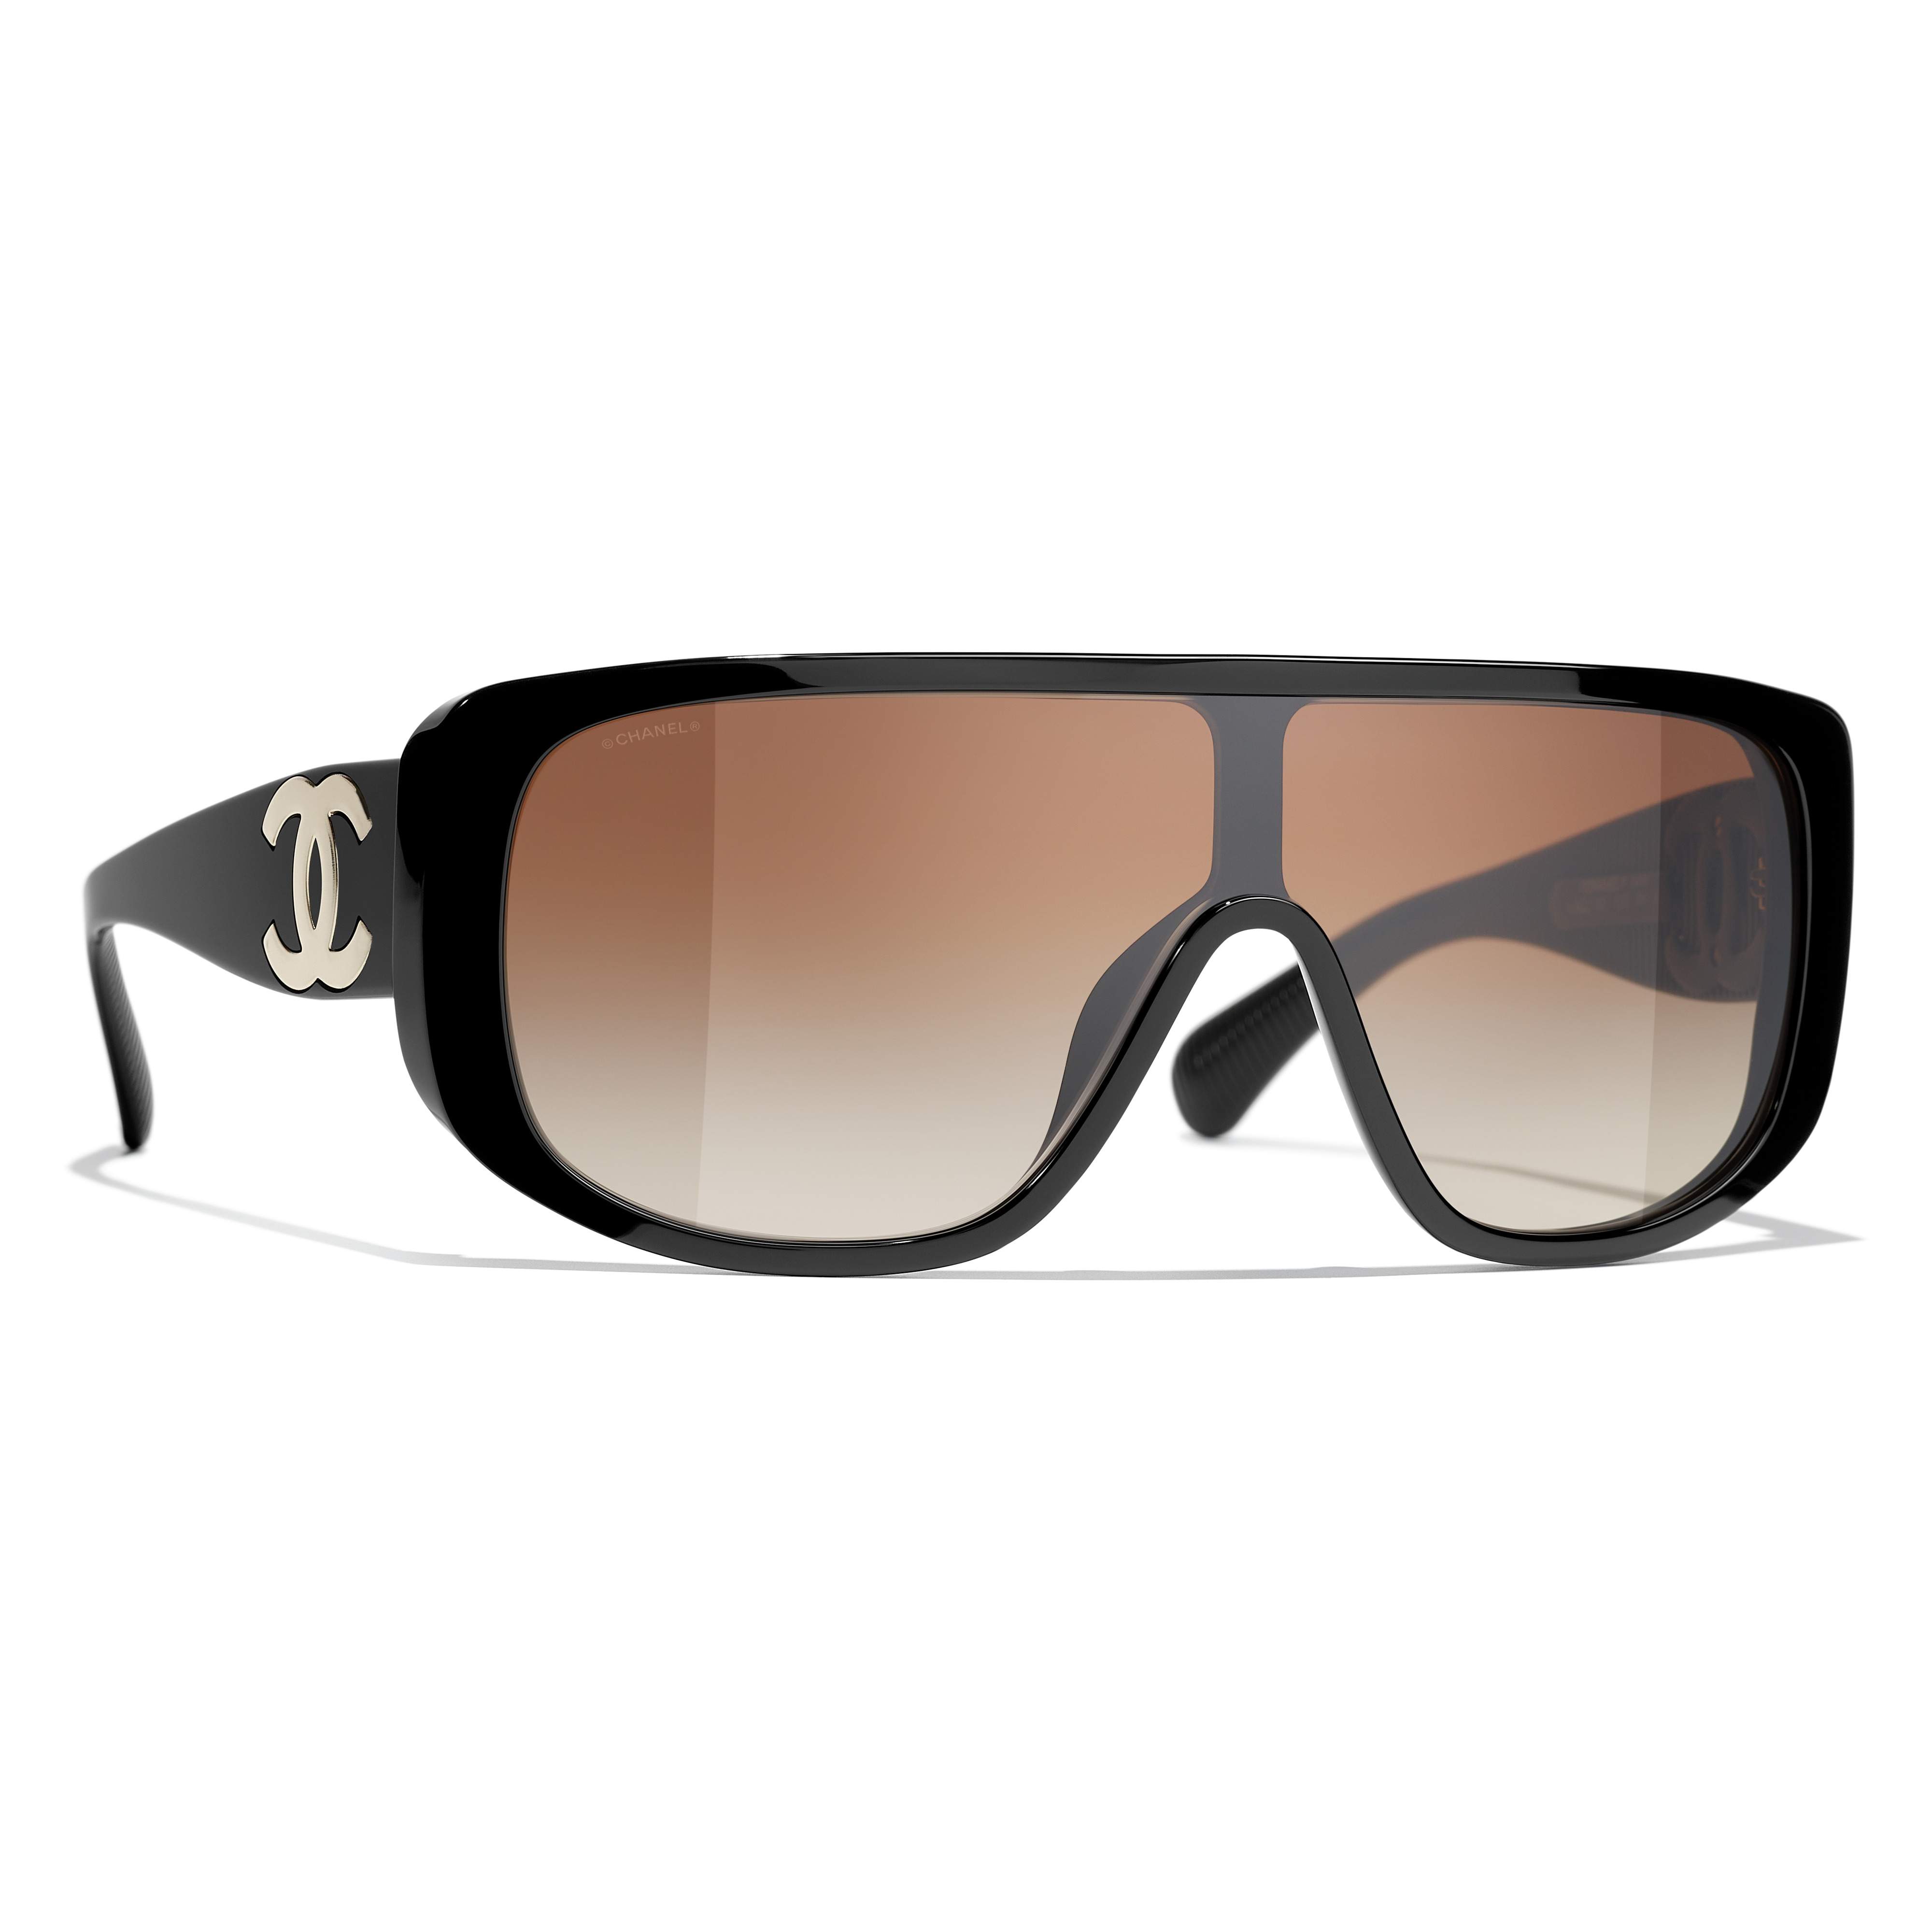 CHANEL 5295 c.1416/S5 55mm Sunglasses New BNIB FRAMES Shades